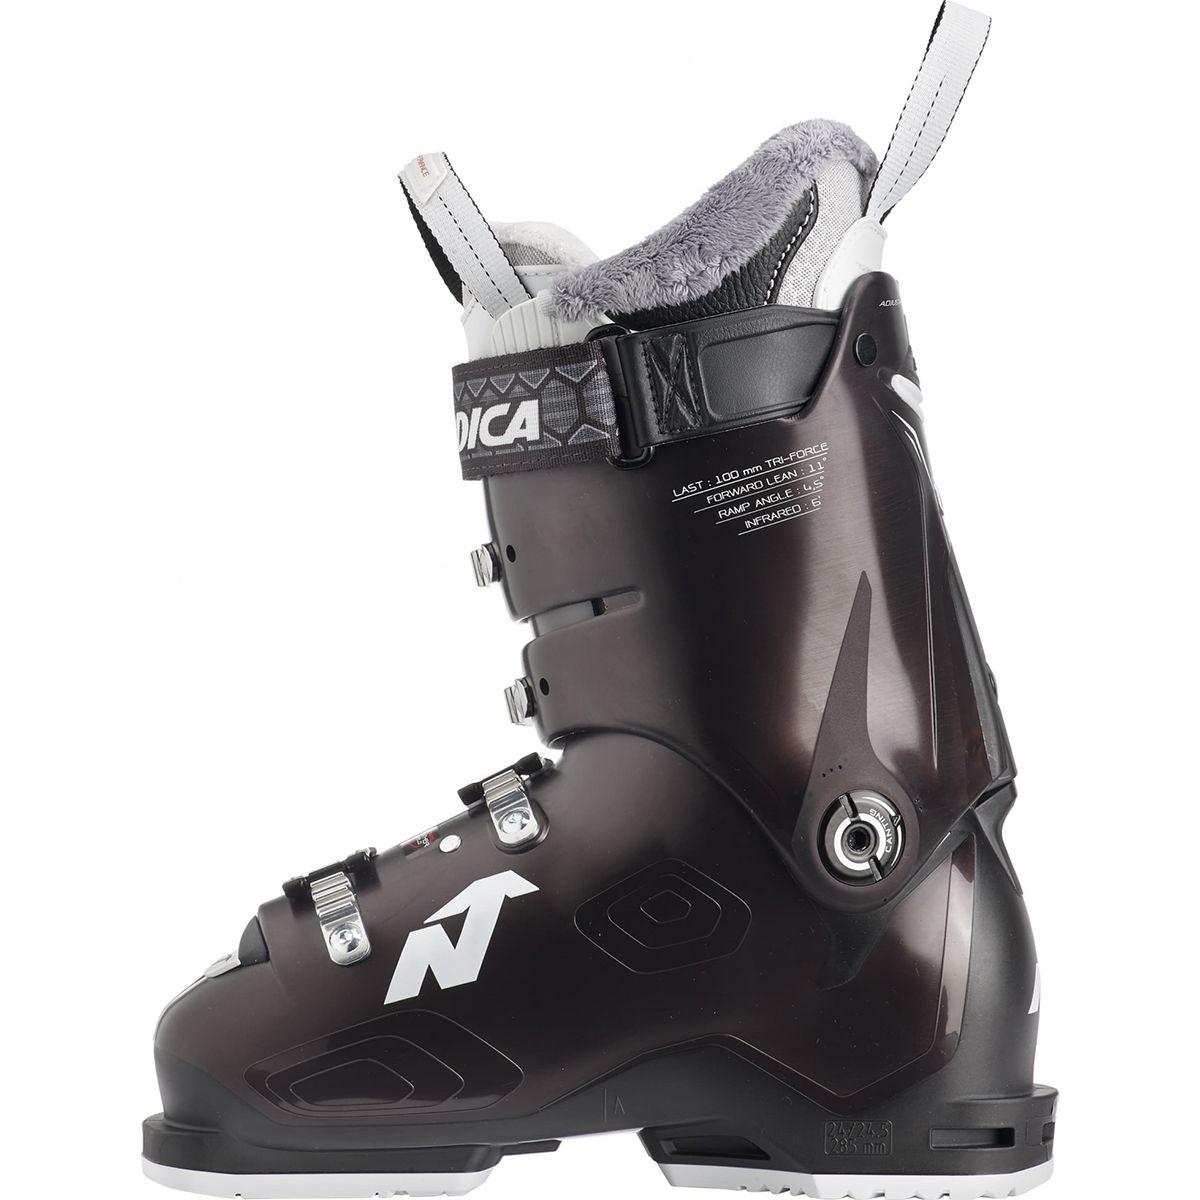  Nordica Speedmachine 95 Ski Boot - Women's